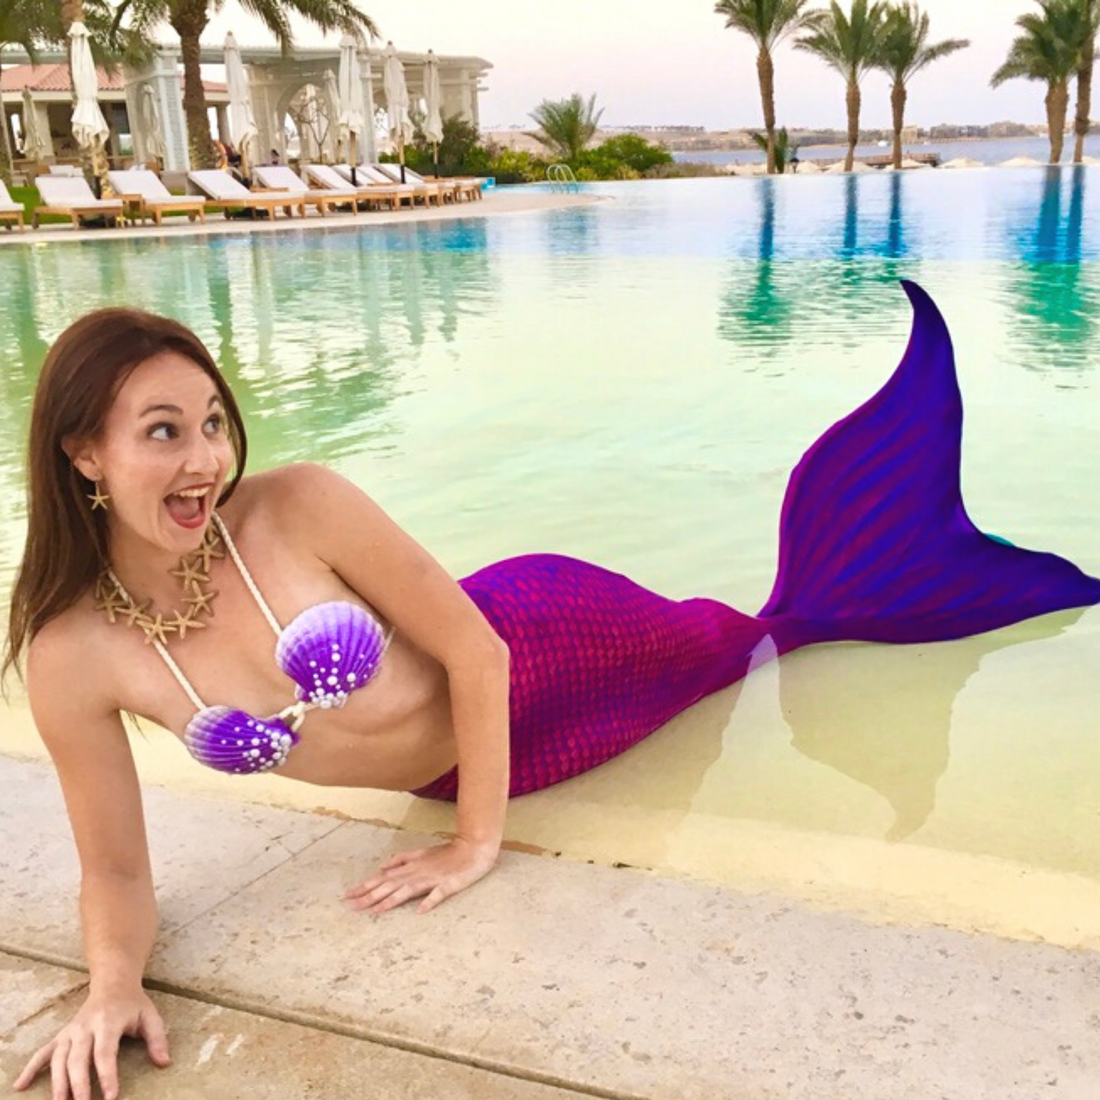 Womens Swimwear Tops made by Mertailor Mermaid Tails!